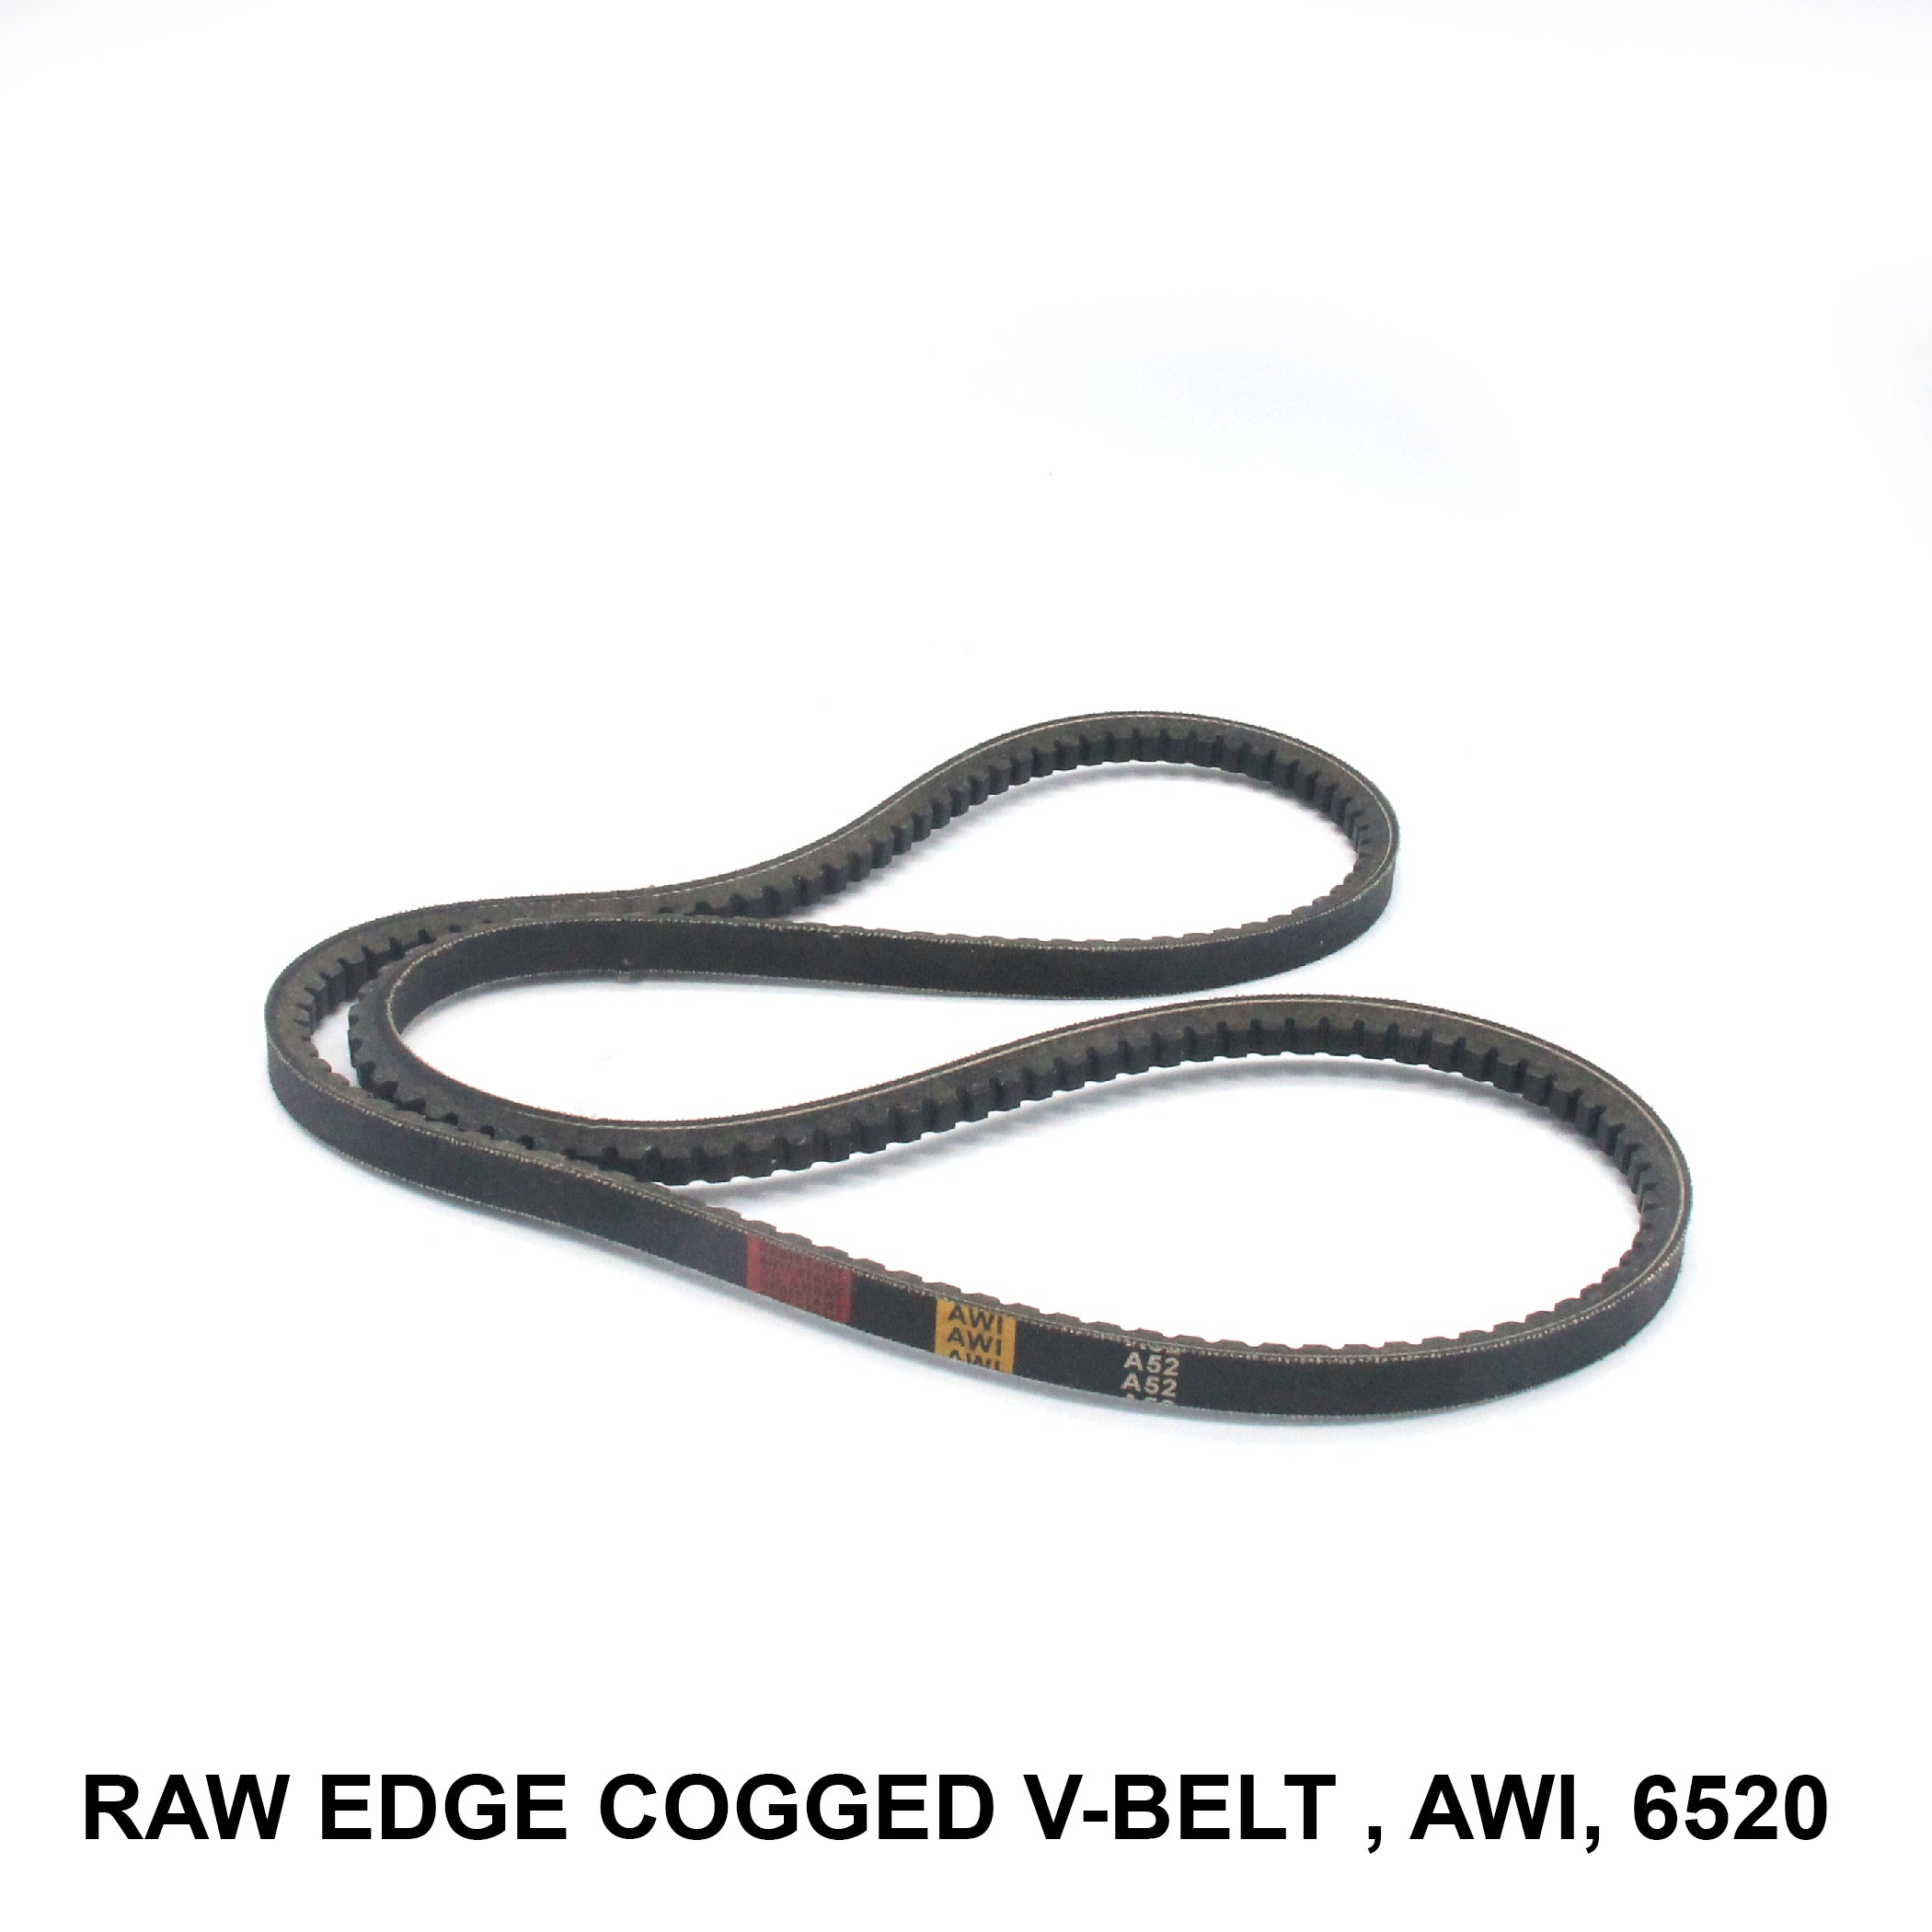 Raw Edge Cogged V-belt (RECMF), AWI, RECMF-6520 (006720)